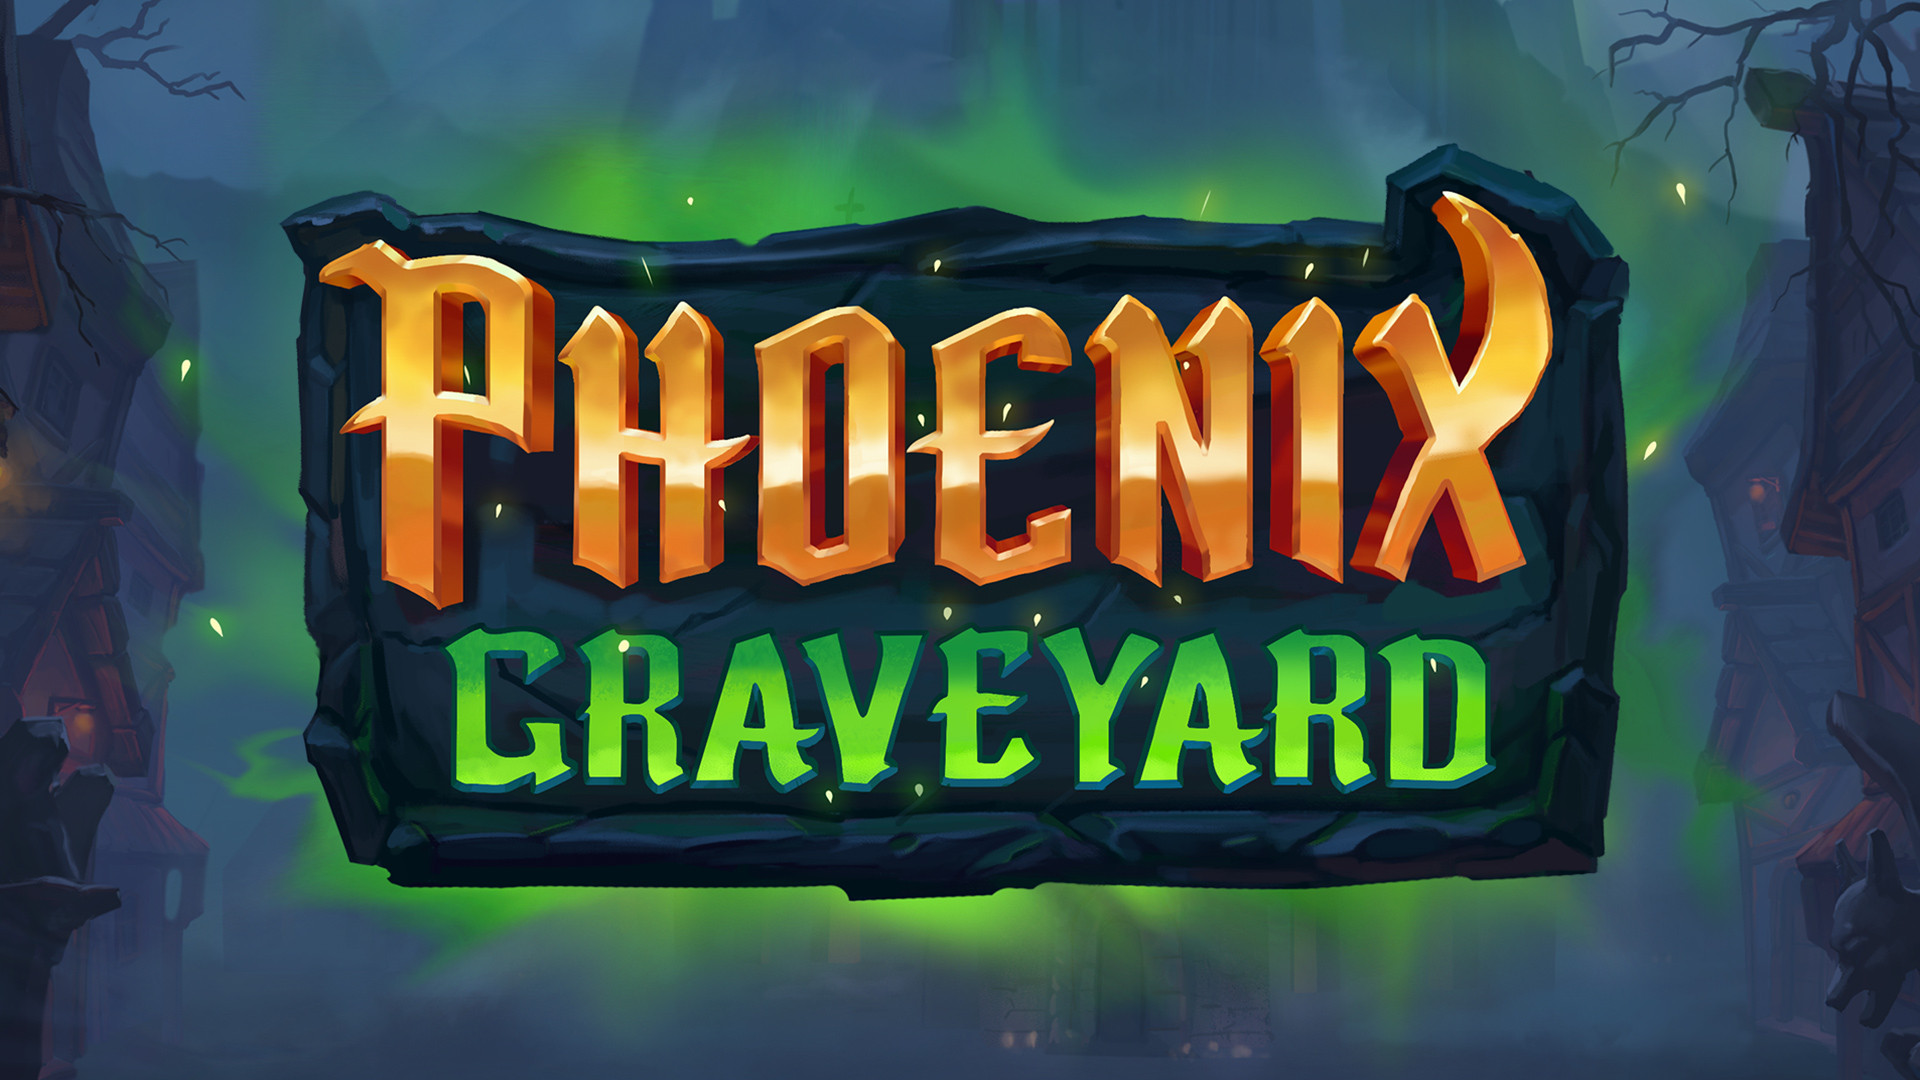 Phoenix Graveyard